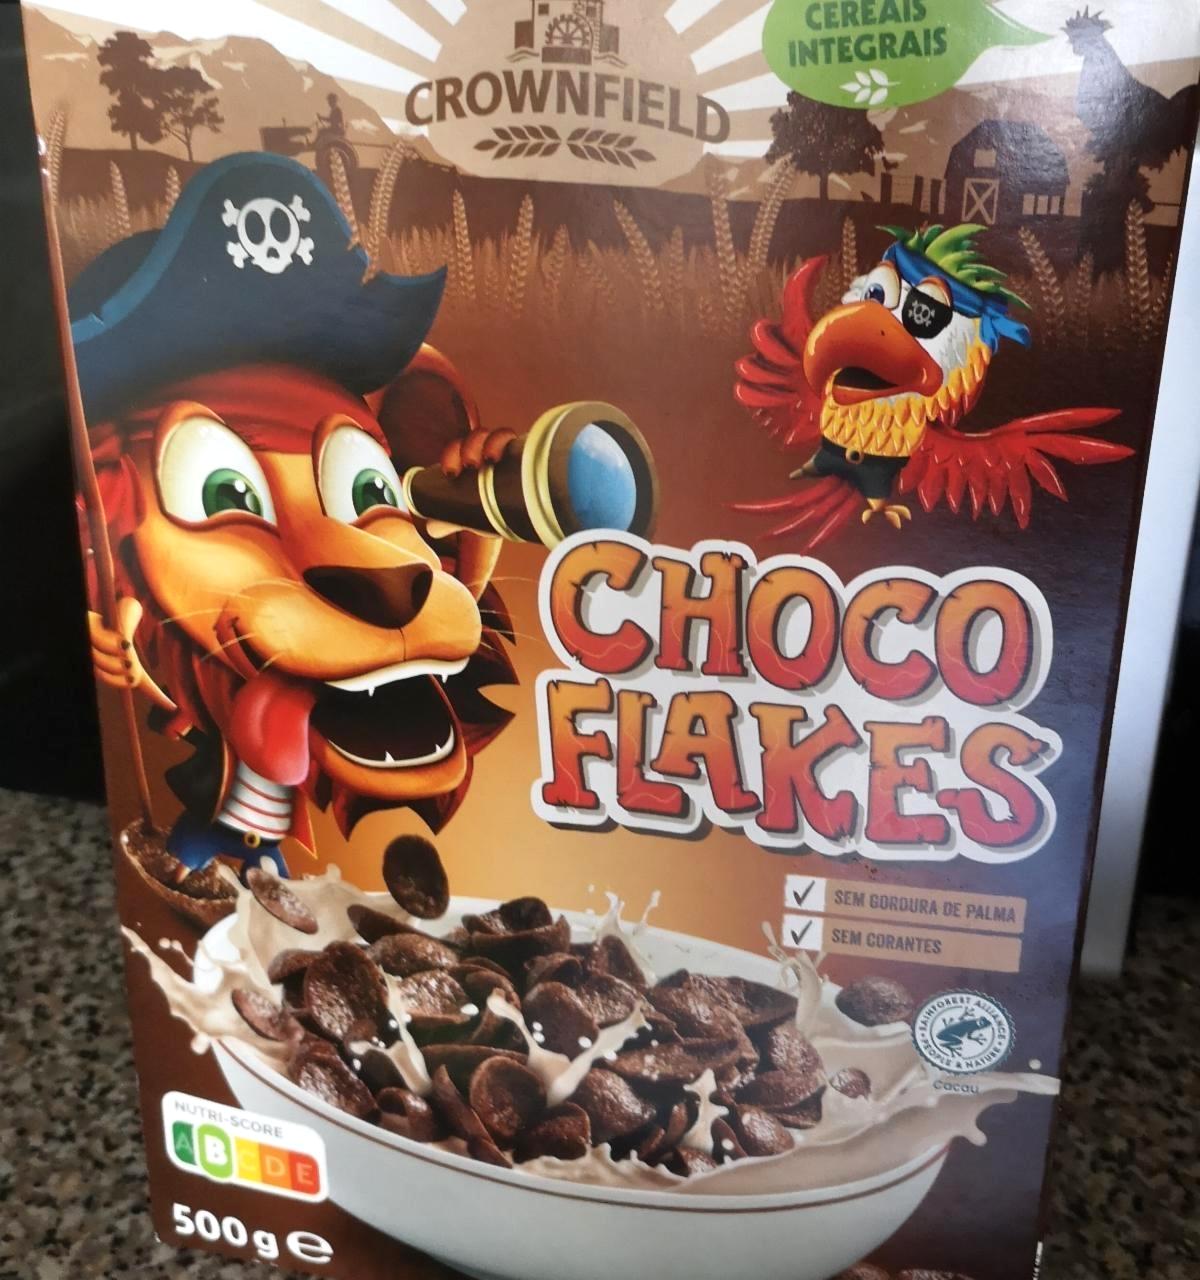 Képek - Choco flakes Crownfield